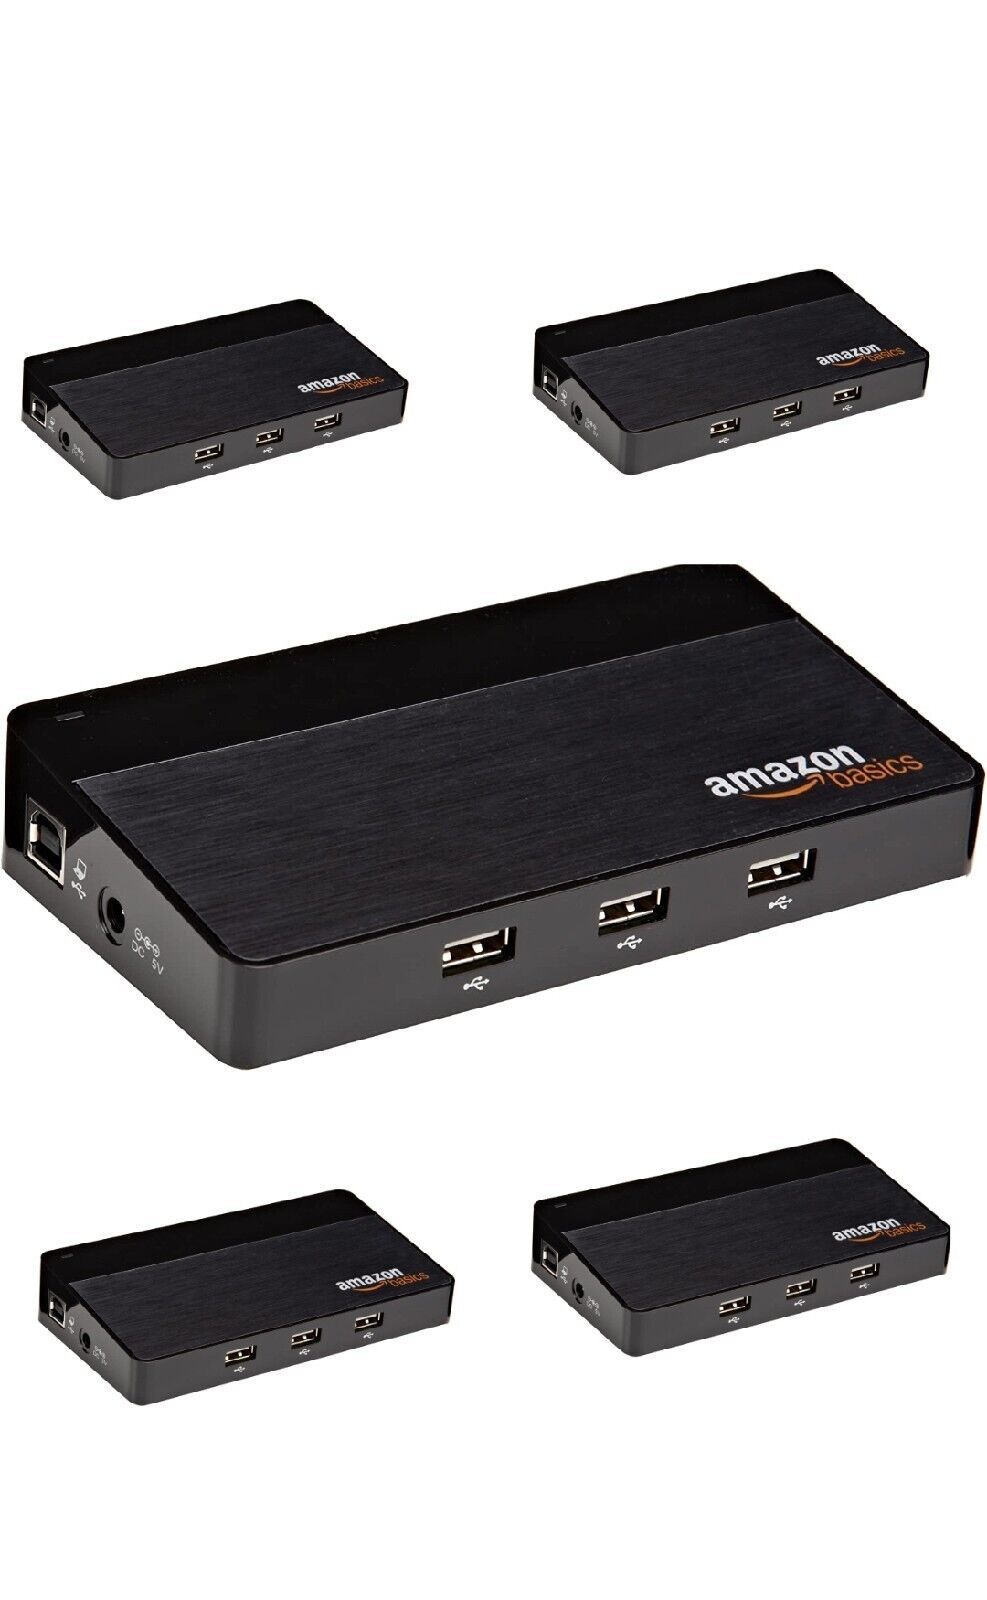 Amazon Basics 10 Port USB 2.0 Hubs (5 Pack), Backwards Compatible w/ USB 1.1